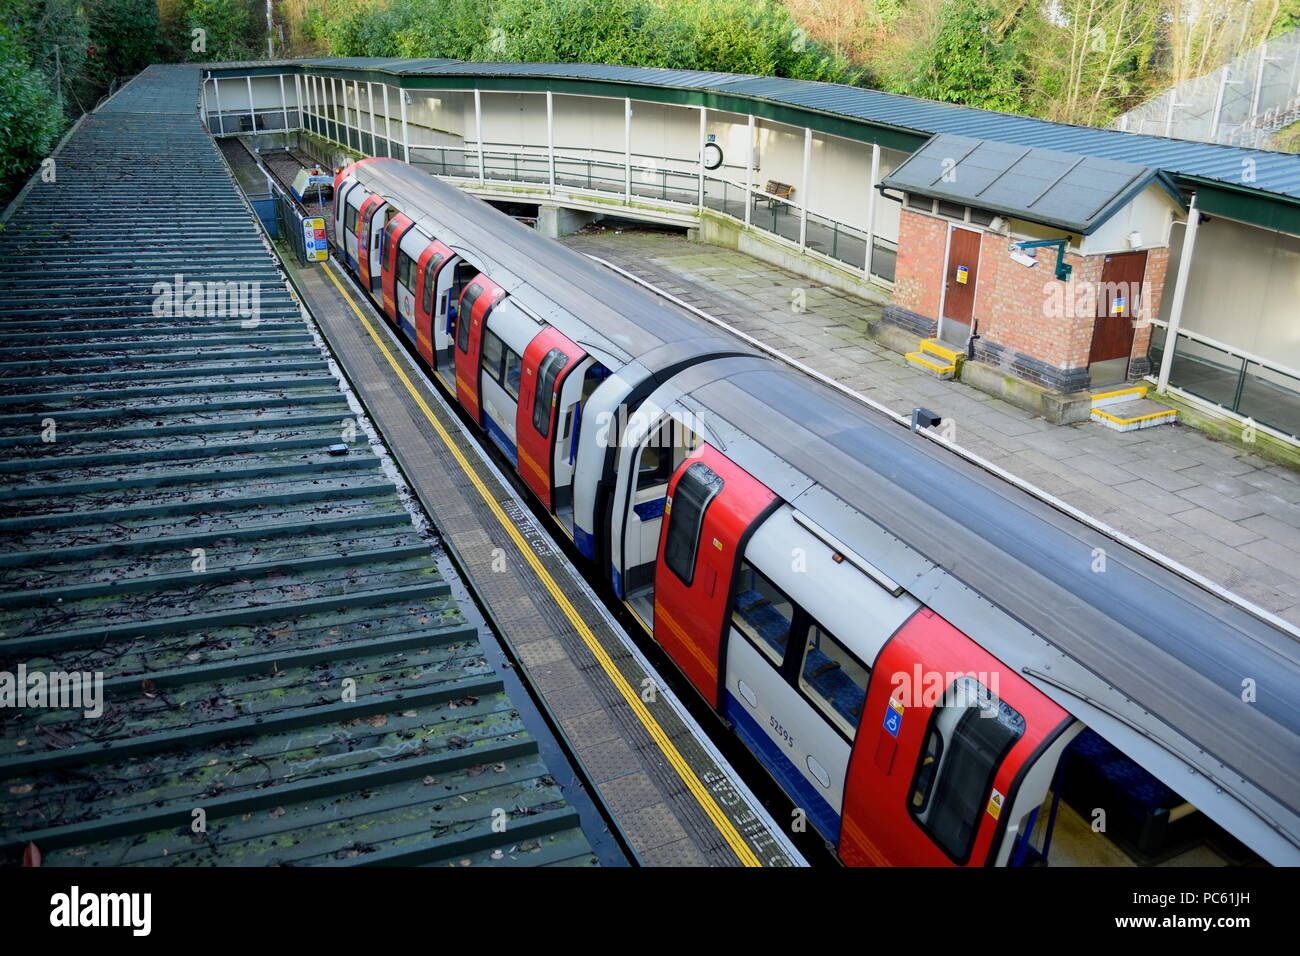 Northern Line train at High Barnet London Underground station Stock Photo